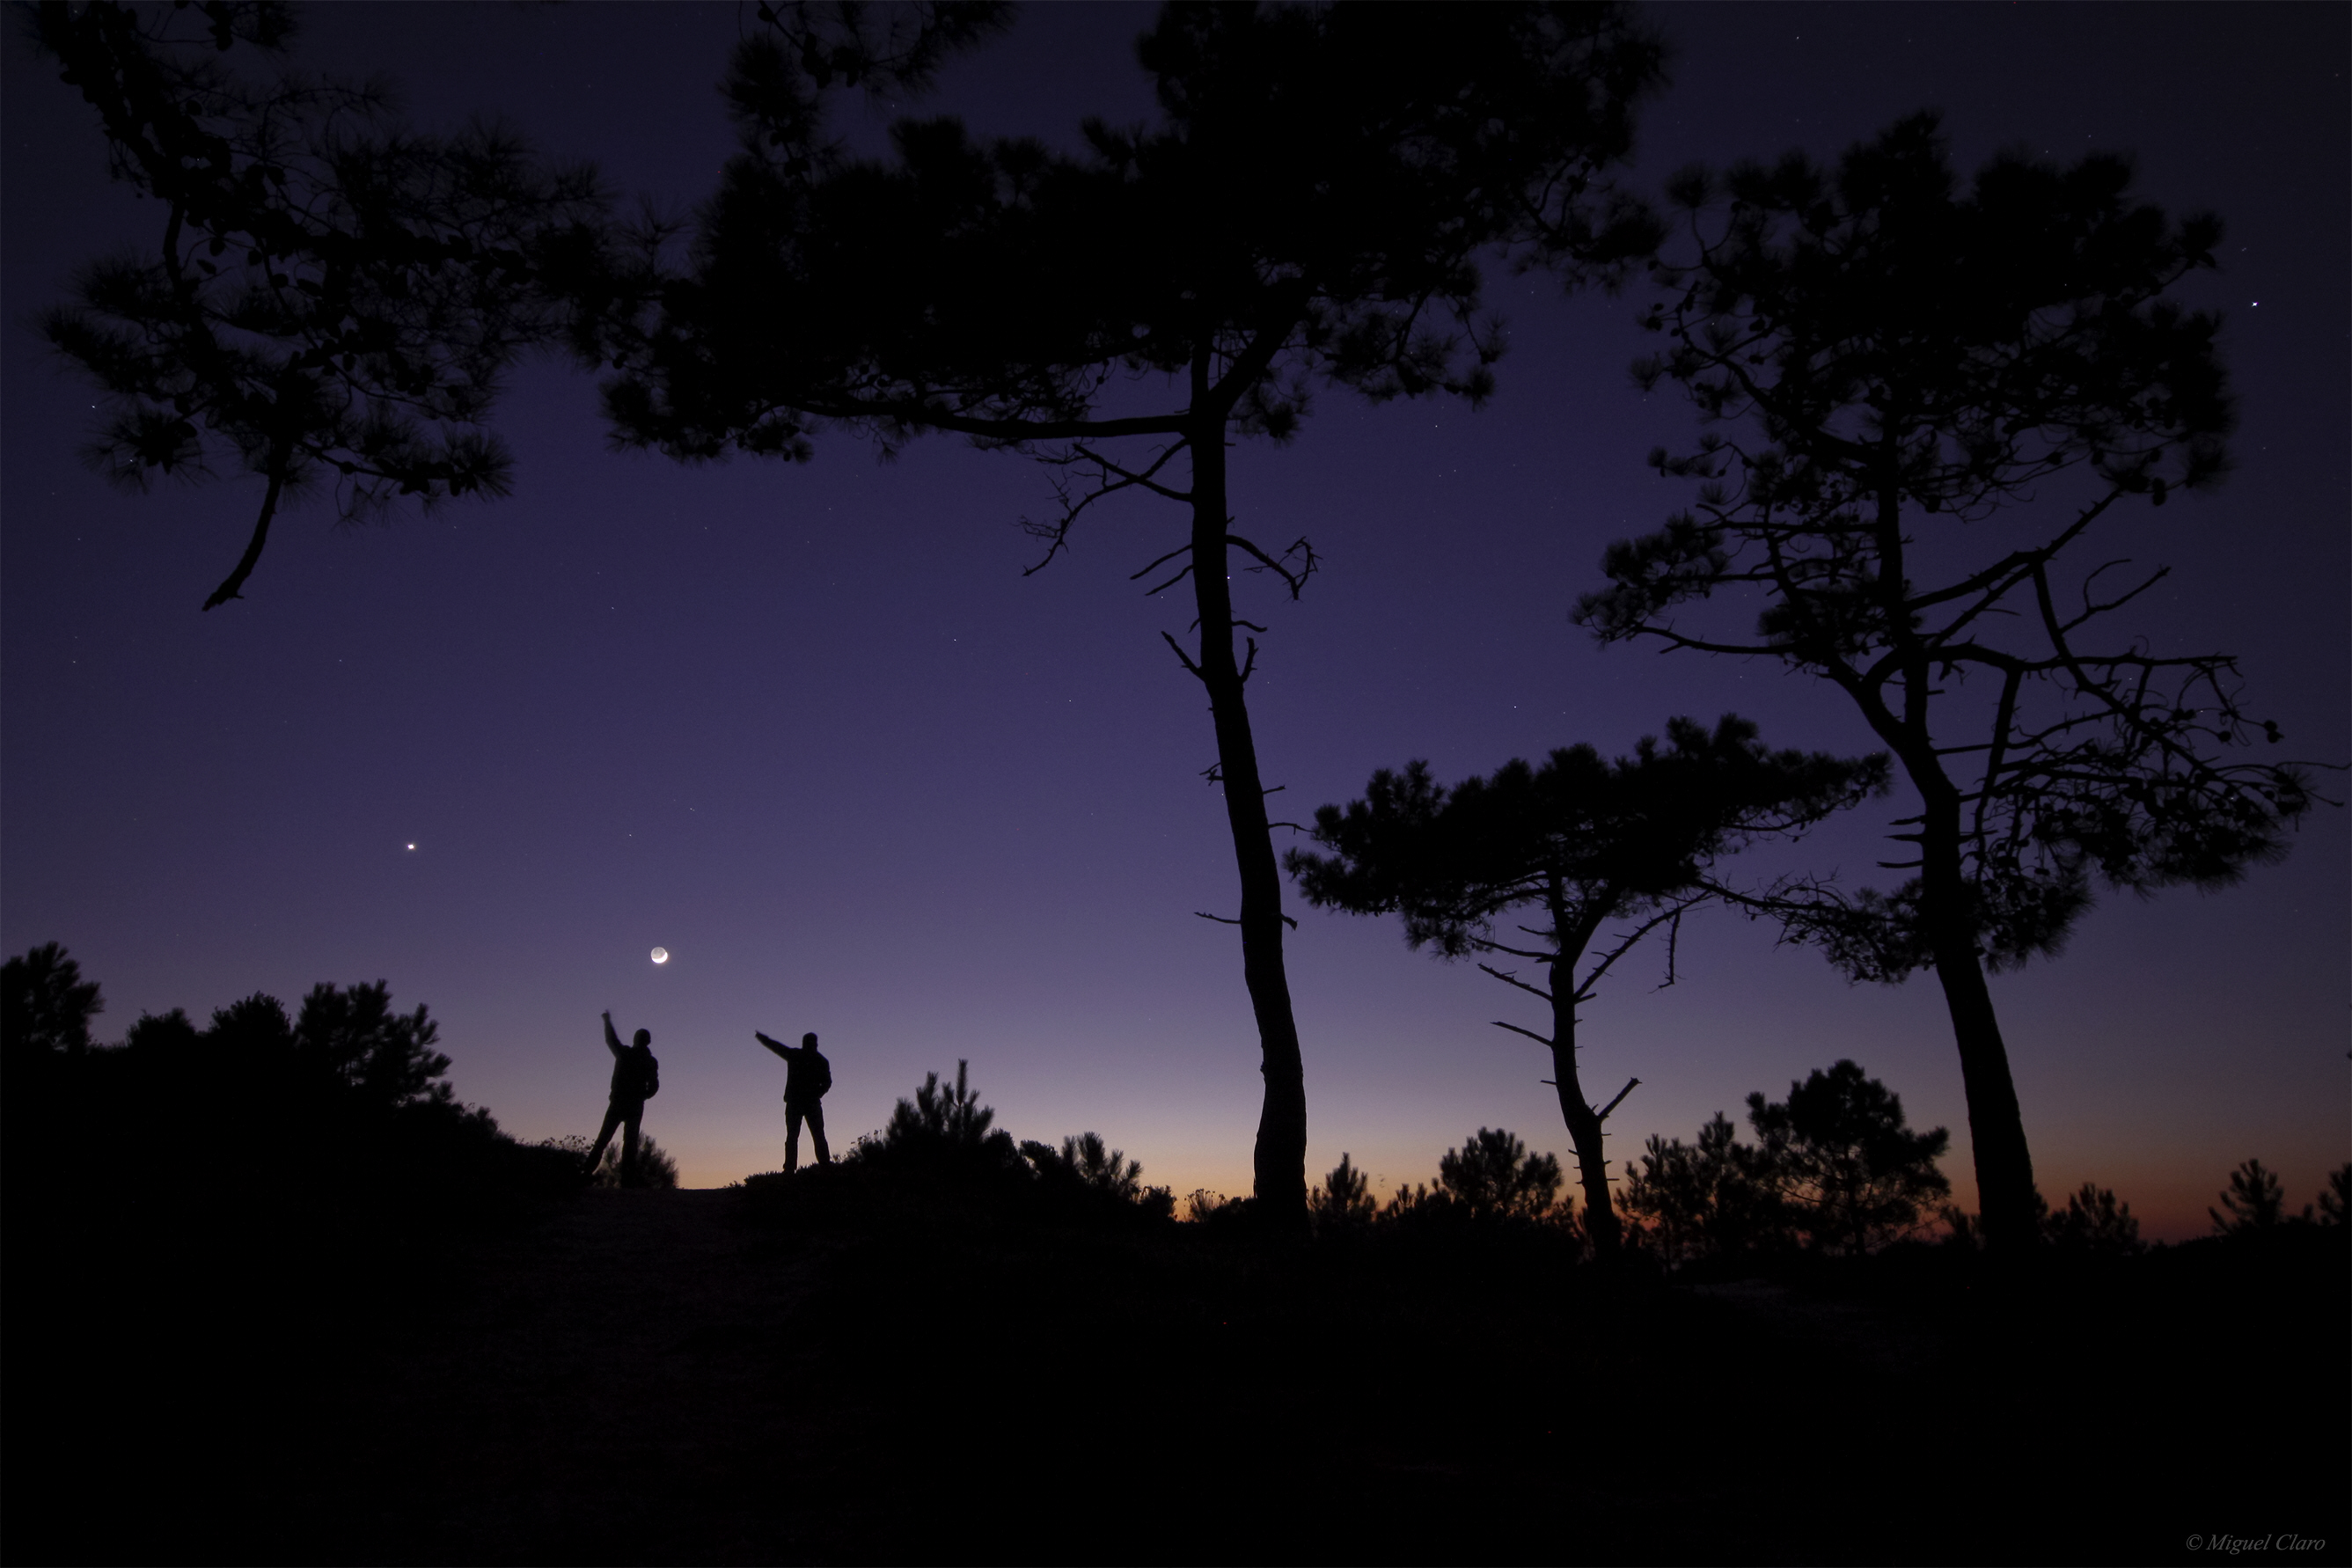 Stargazing the night sky @ Portfolio Categories @ Astrophotography by  Miguel Claro